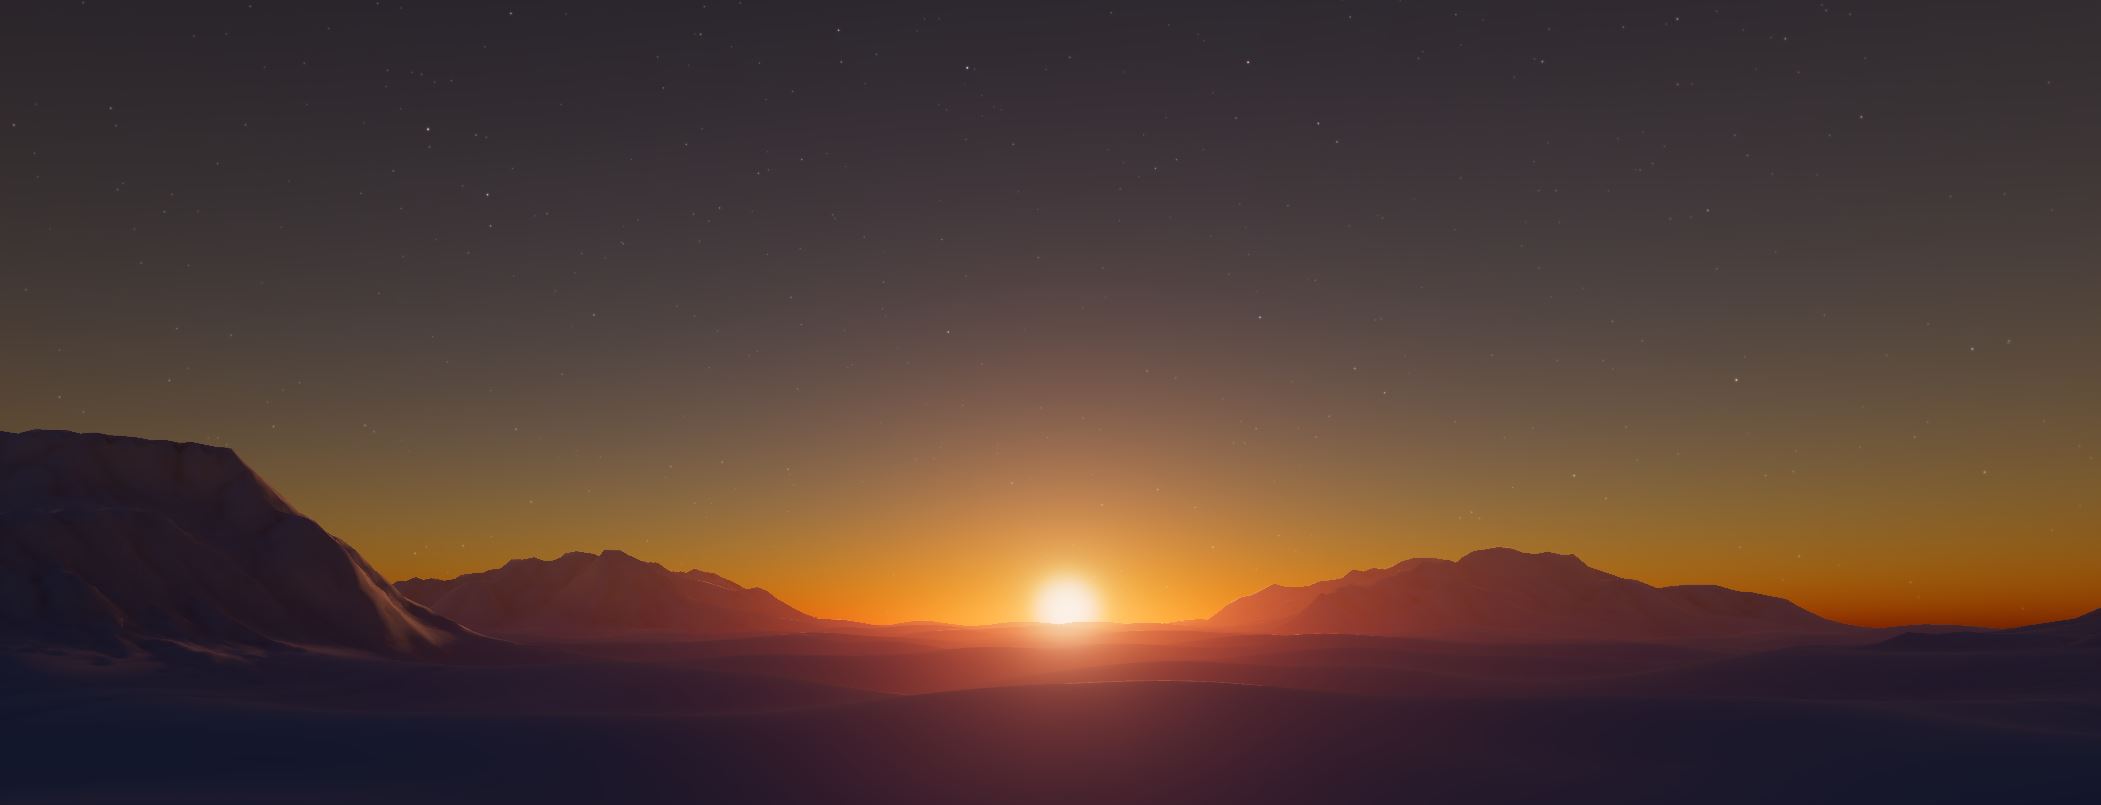 Sky atmosphere in sunset mountain scene